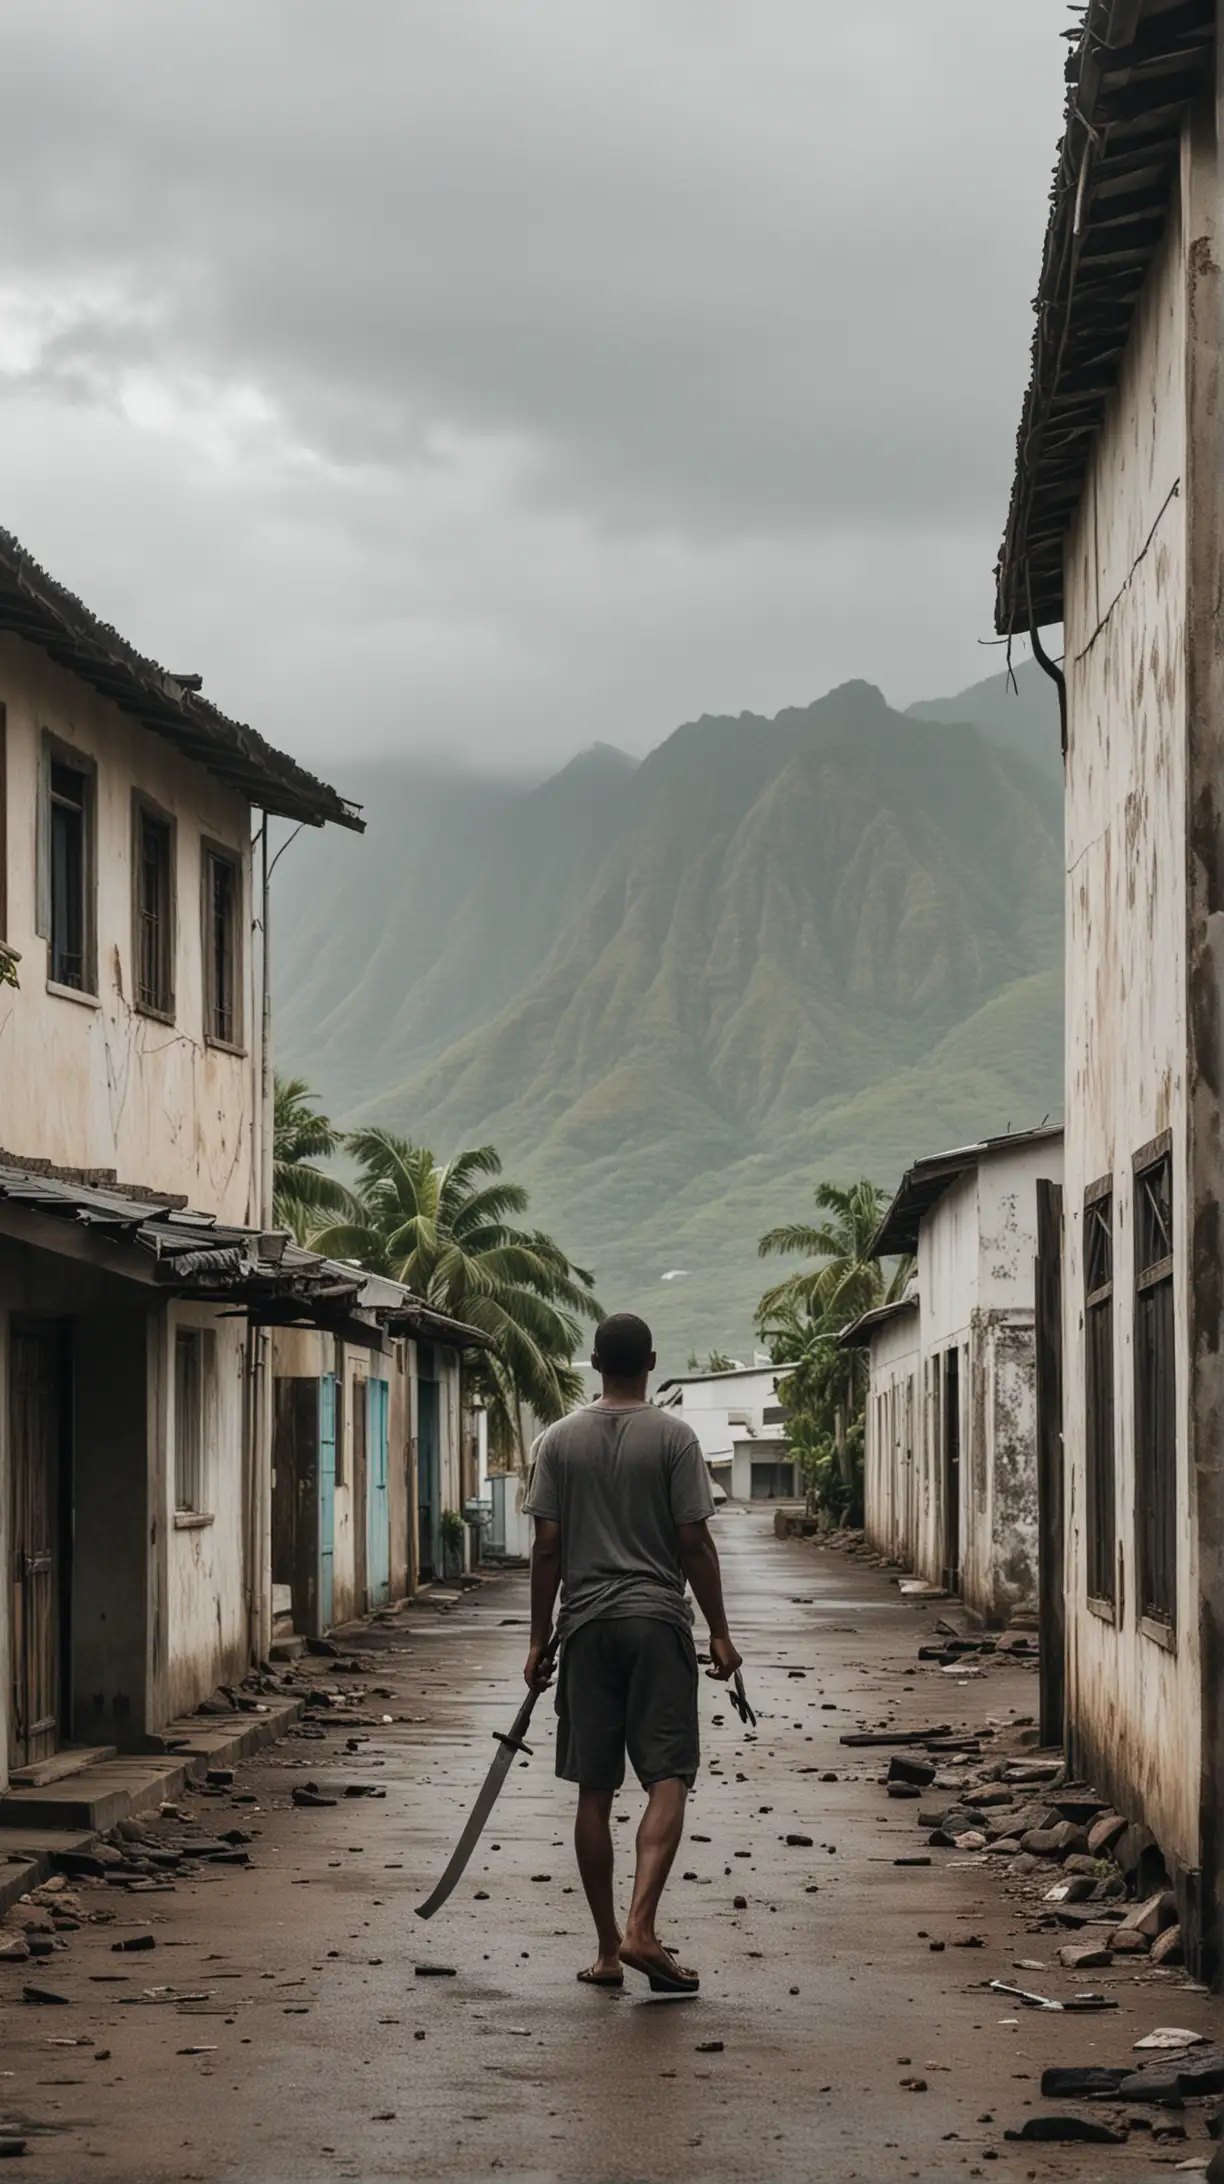 Mysterious Man with Machete Facing Building in Gloomy Reunion Island Scene